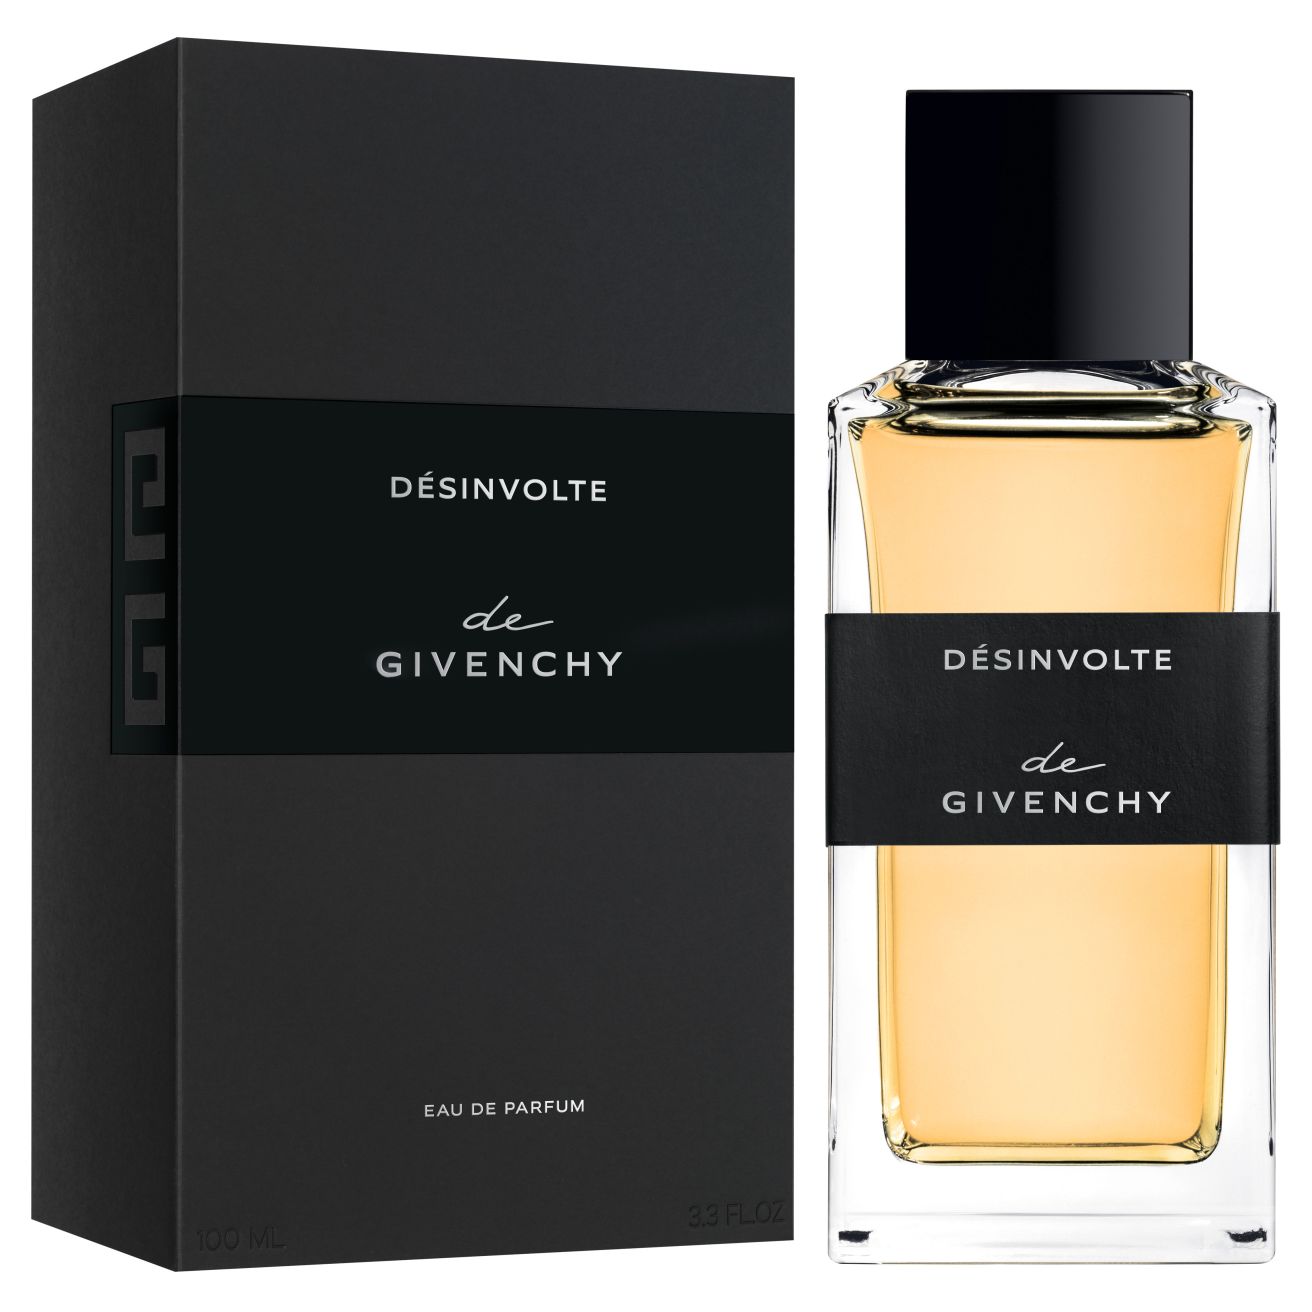 Givenchy society. Givenchy Gentleman Society Eau de Parfum. Gentleman Society Eau de Parfum extrême Givenchy. Givenchy Gentleman Society.